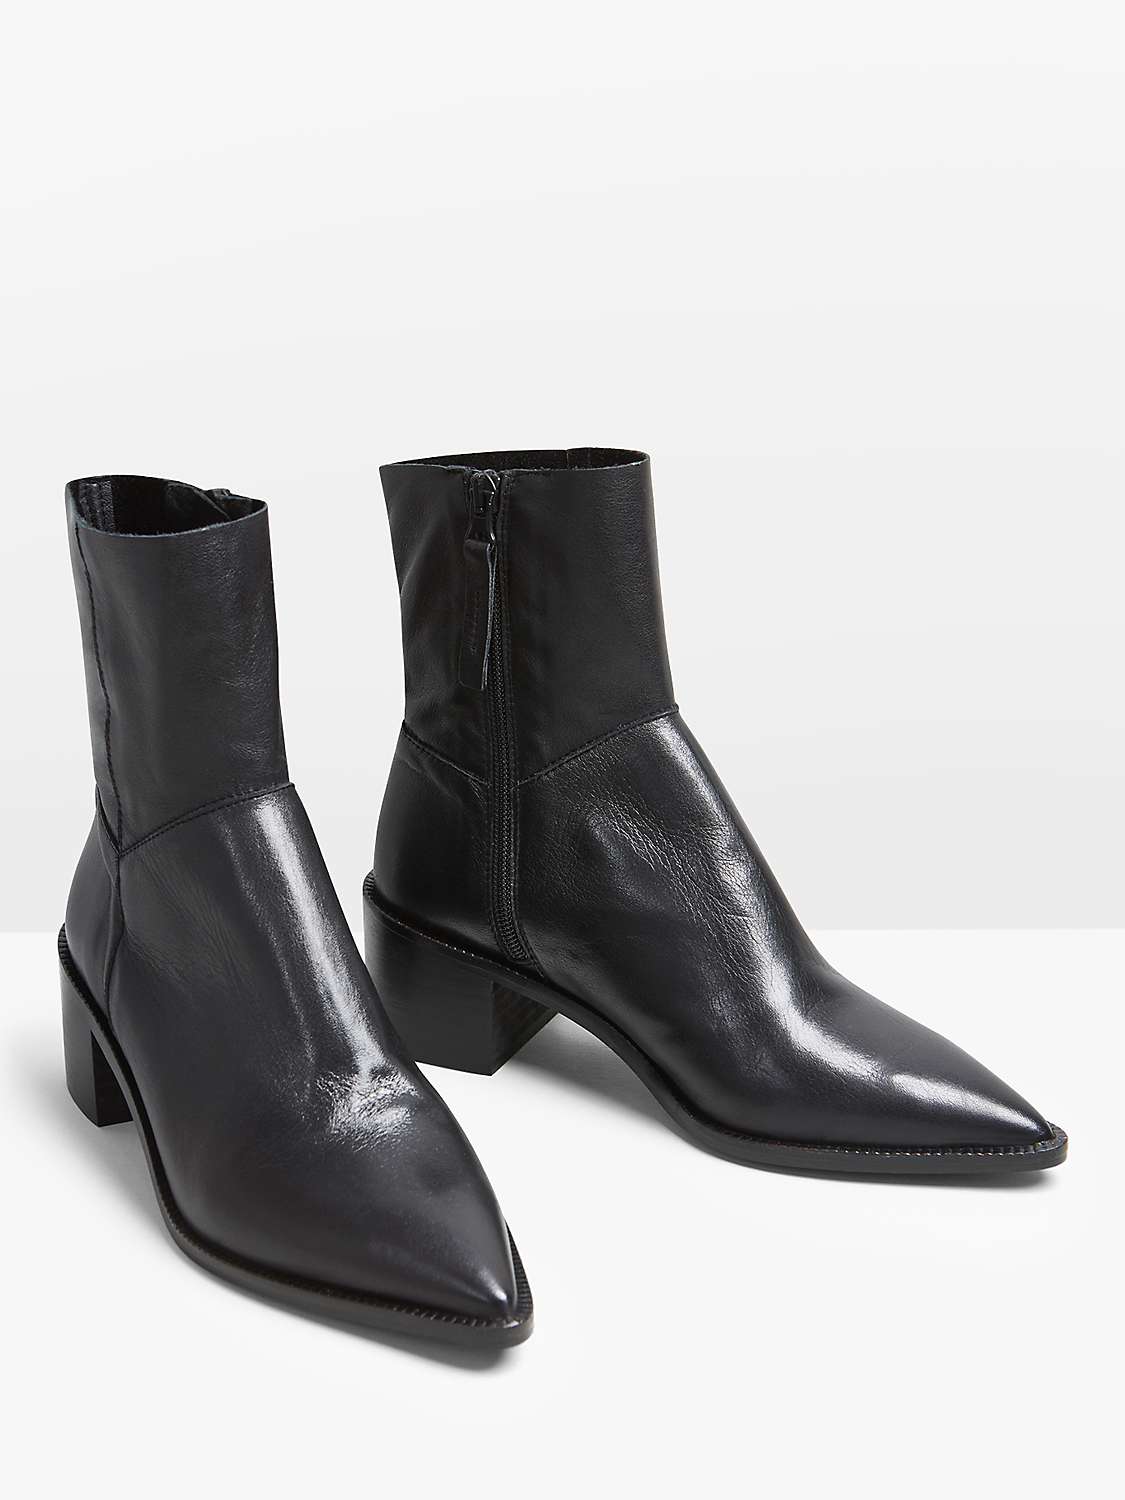 HUSH Taylah Block Heel Leather Ankle Boots, Black at John Lewis & Partners